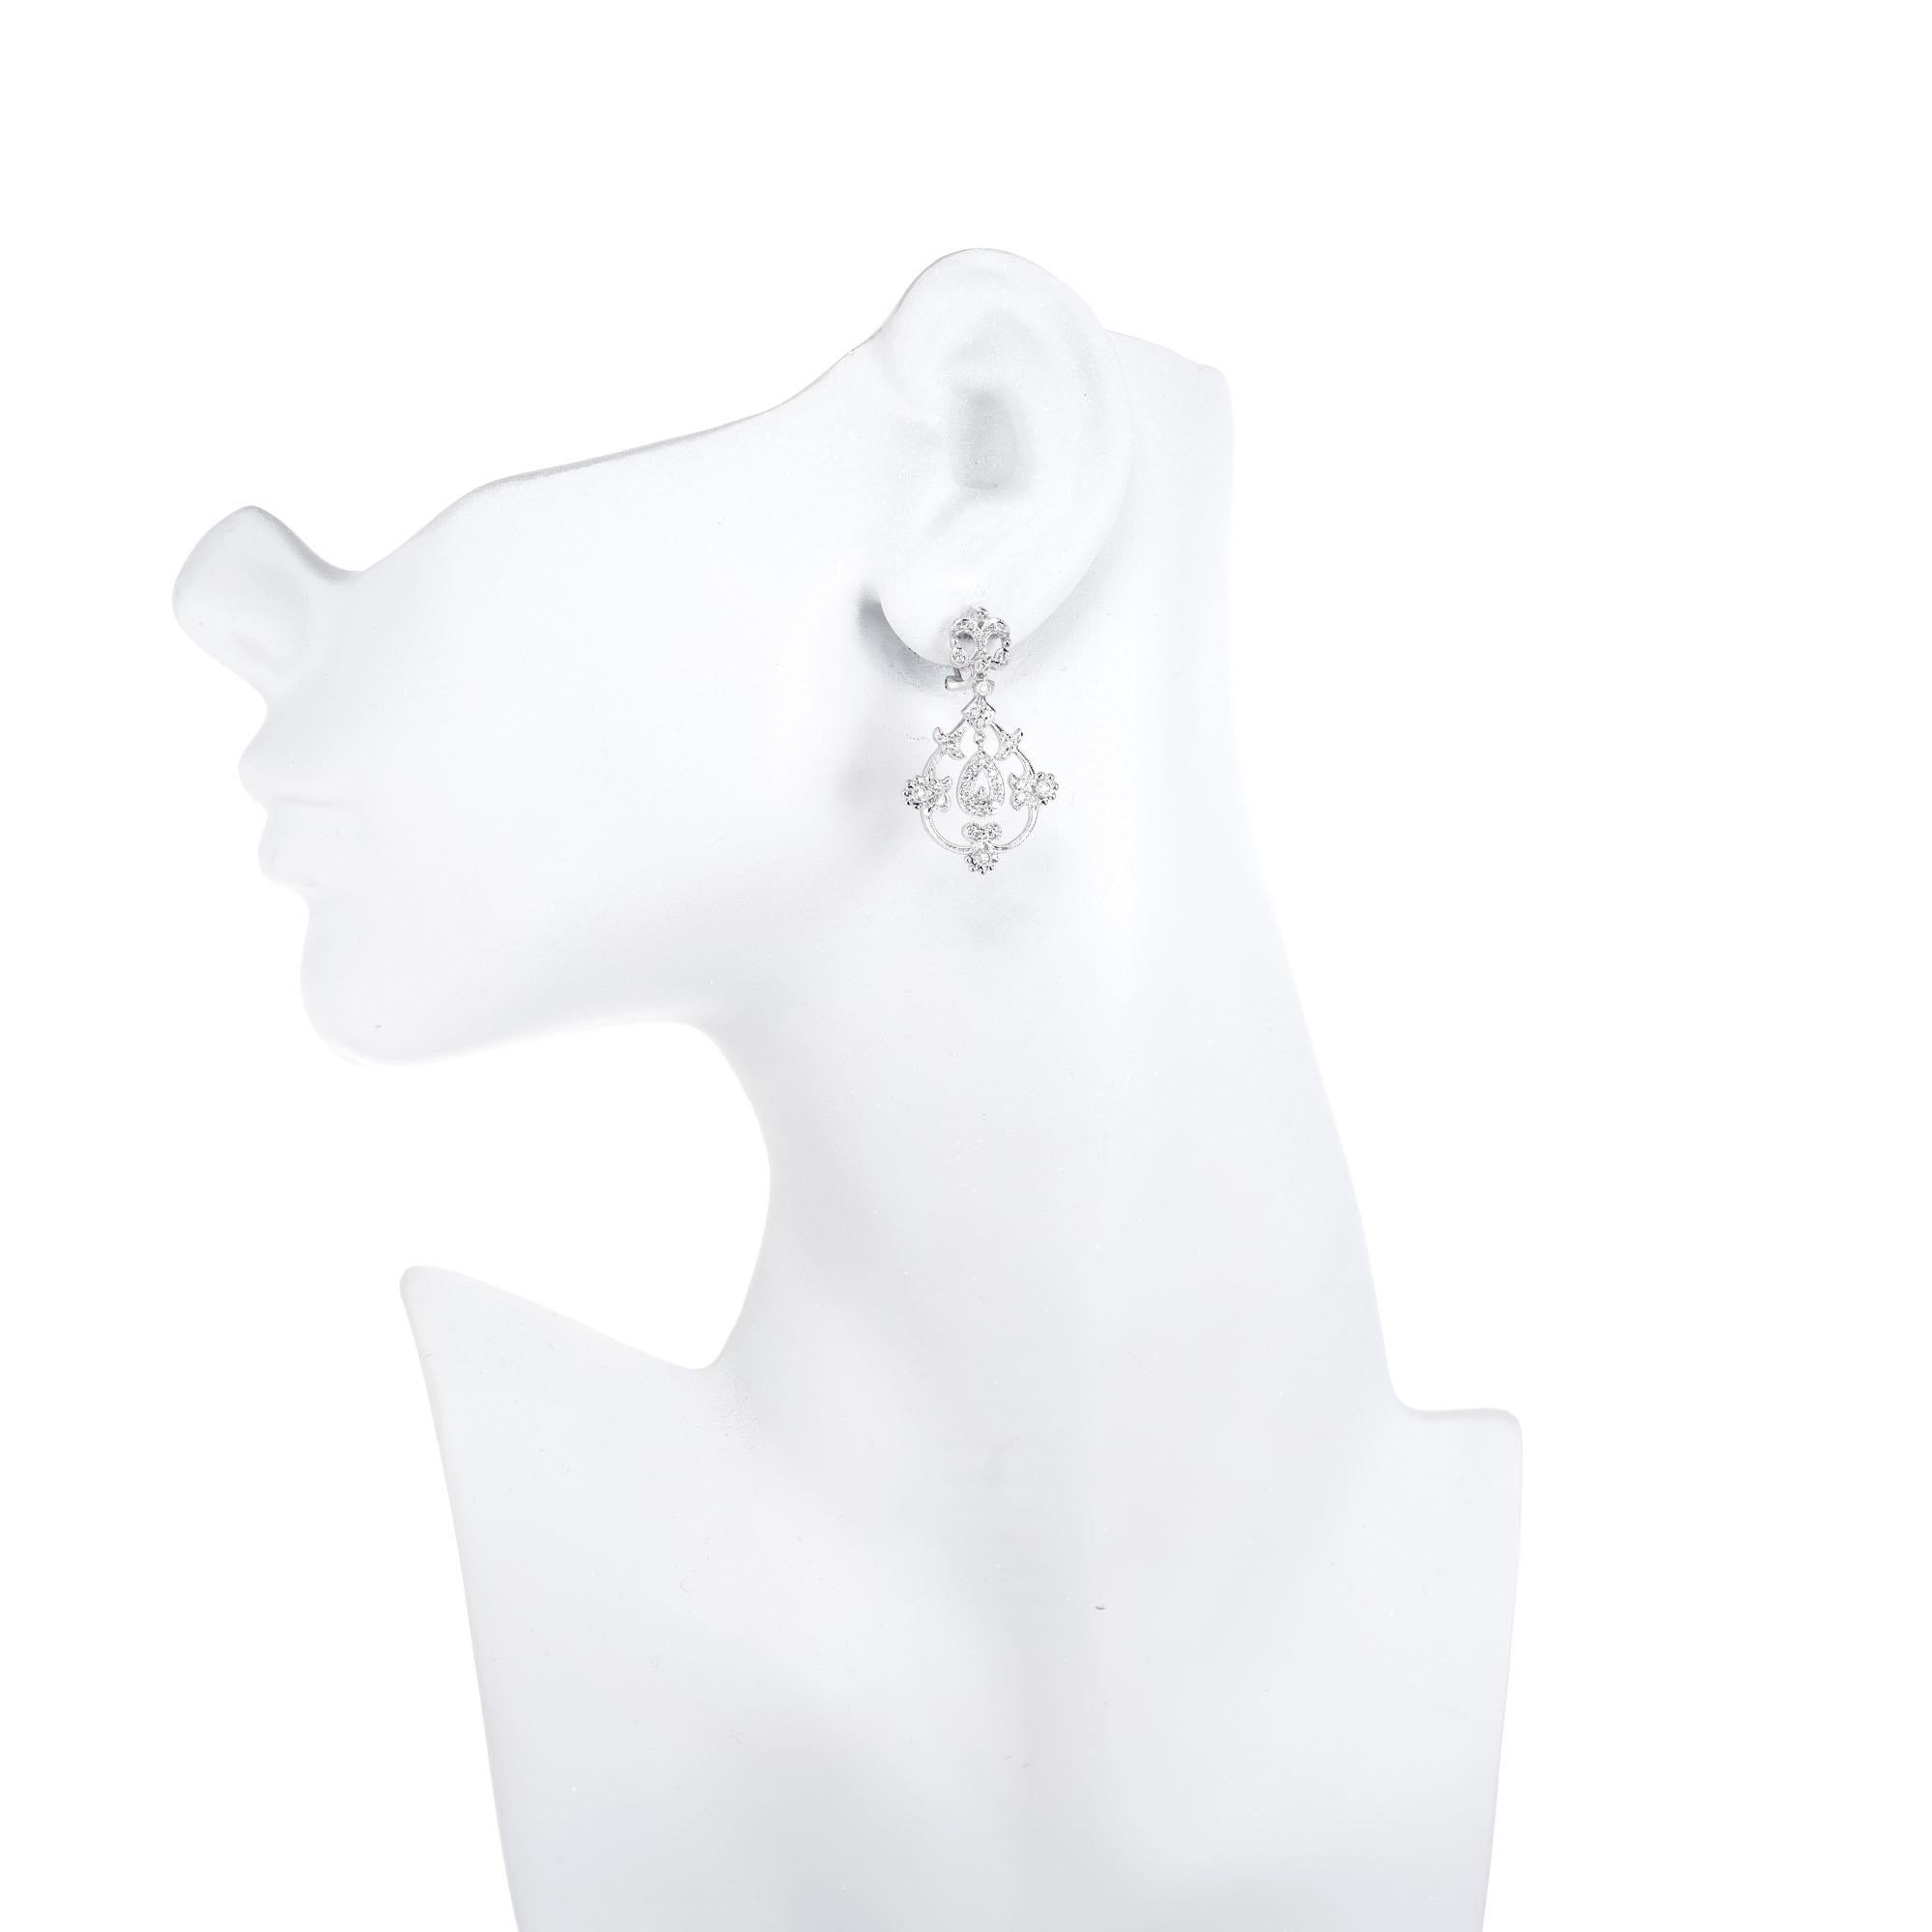 .25 carat diamond earrings actual size